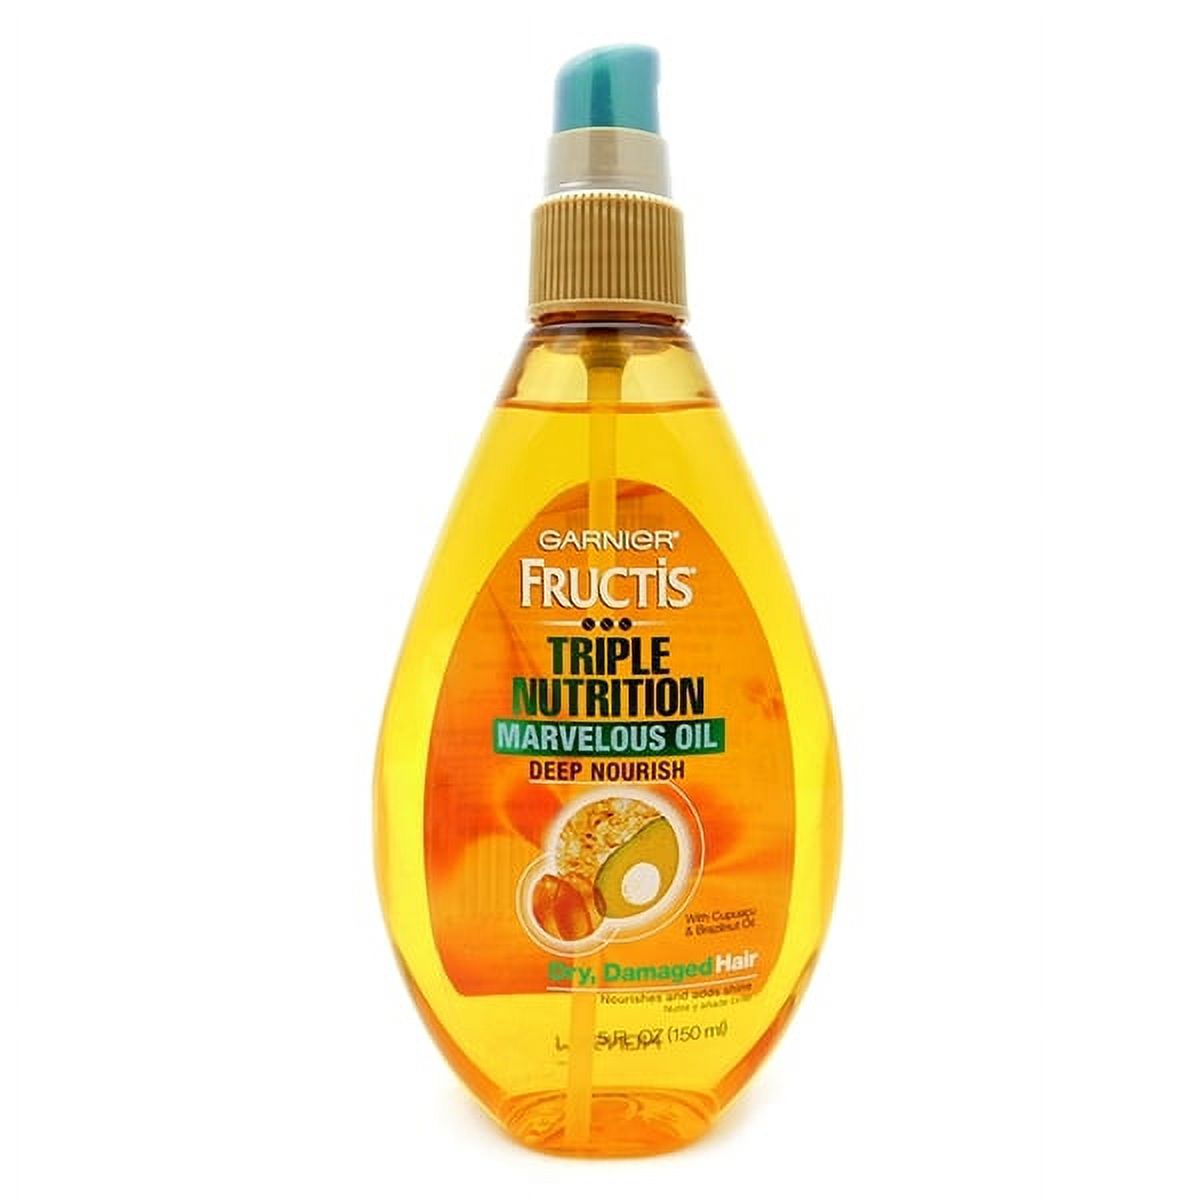 Garnier Fructis Triple Nutrition Marvelous Oil Deep Nourish Dry, Damaged Hair 5 Fl Oz. - image 1 of 6